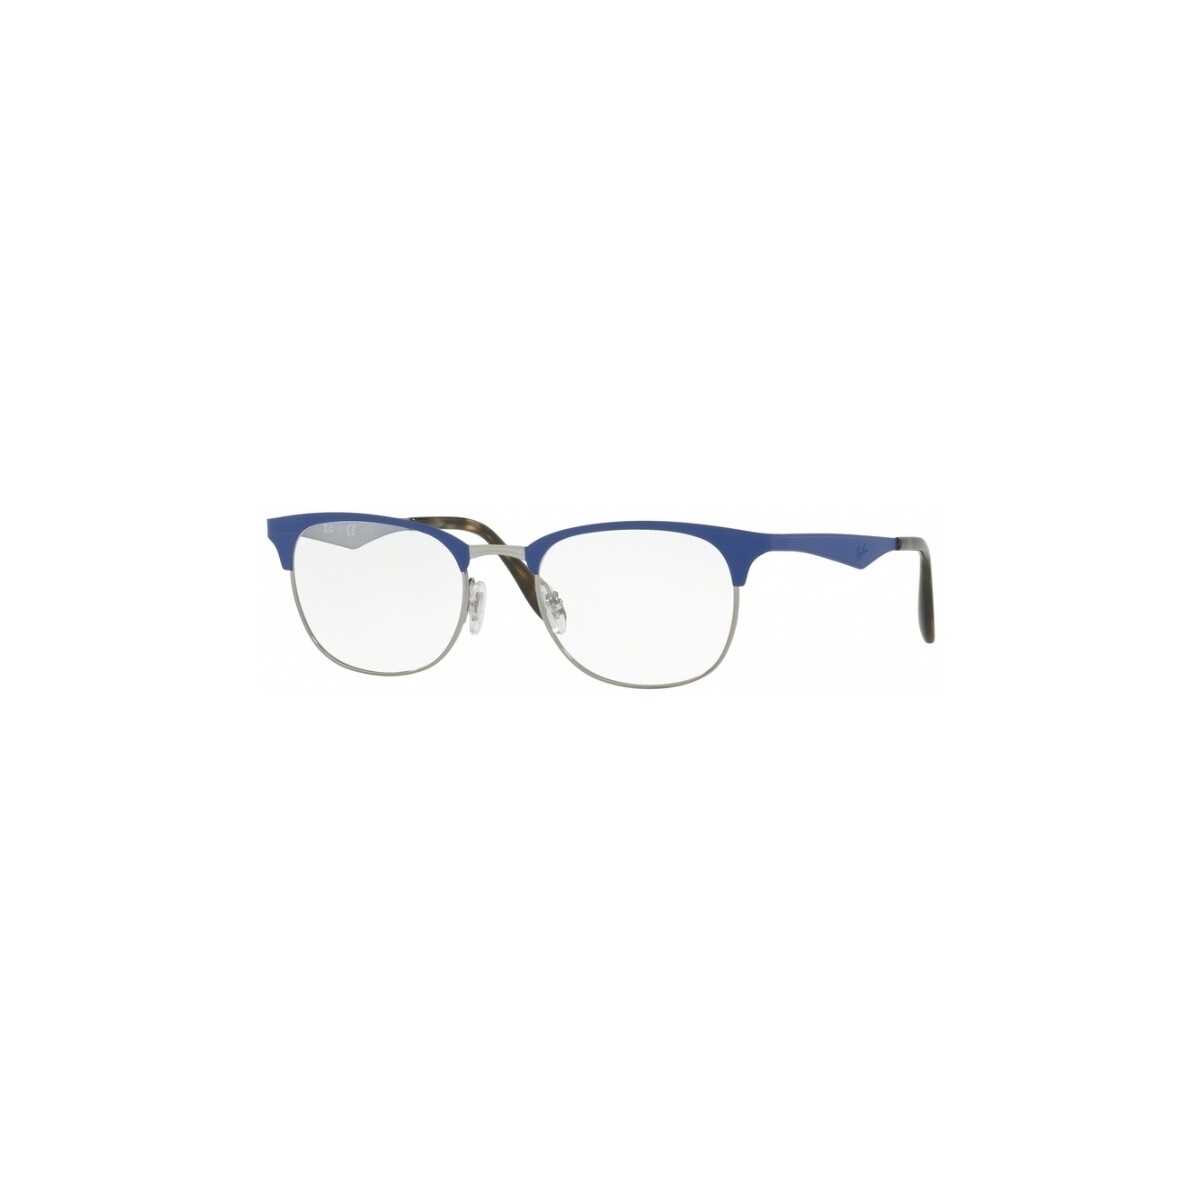 Orologi & Gioielli Occhiali da sole Ray-ban RX6346 Occhiali Vista, Blu, 50 mm Blu